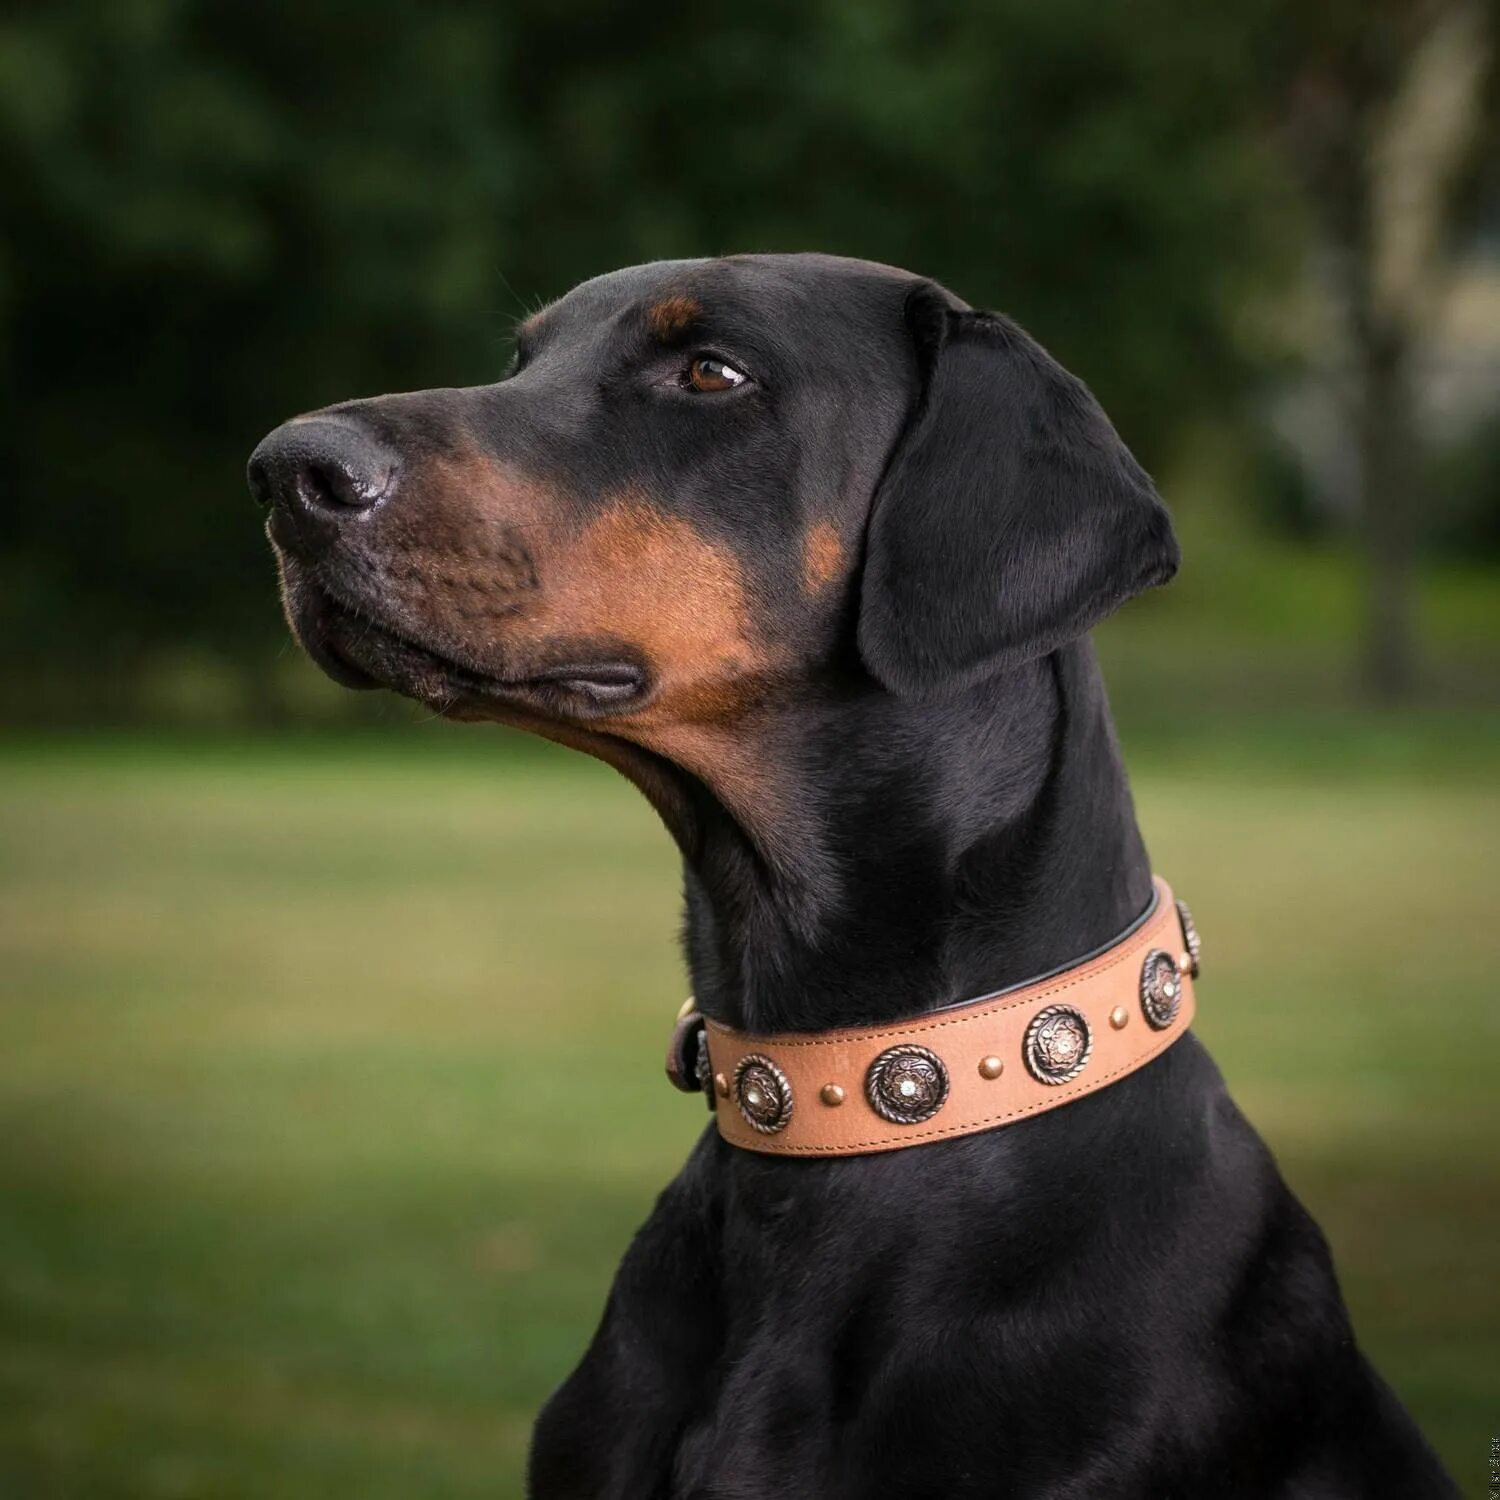 Dog Collar. Dog in a Collar. Собака в кожаном ошейнике. Luminous Dog Collar.